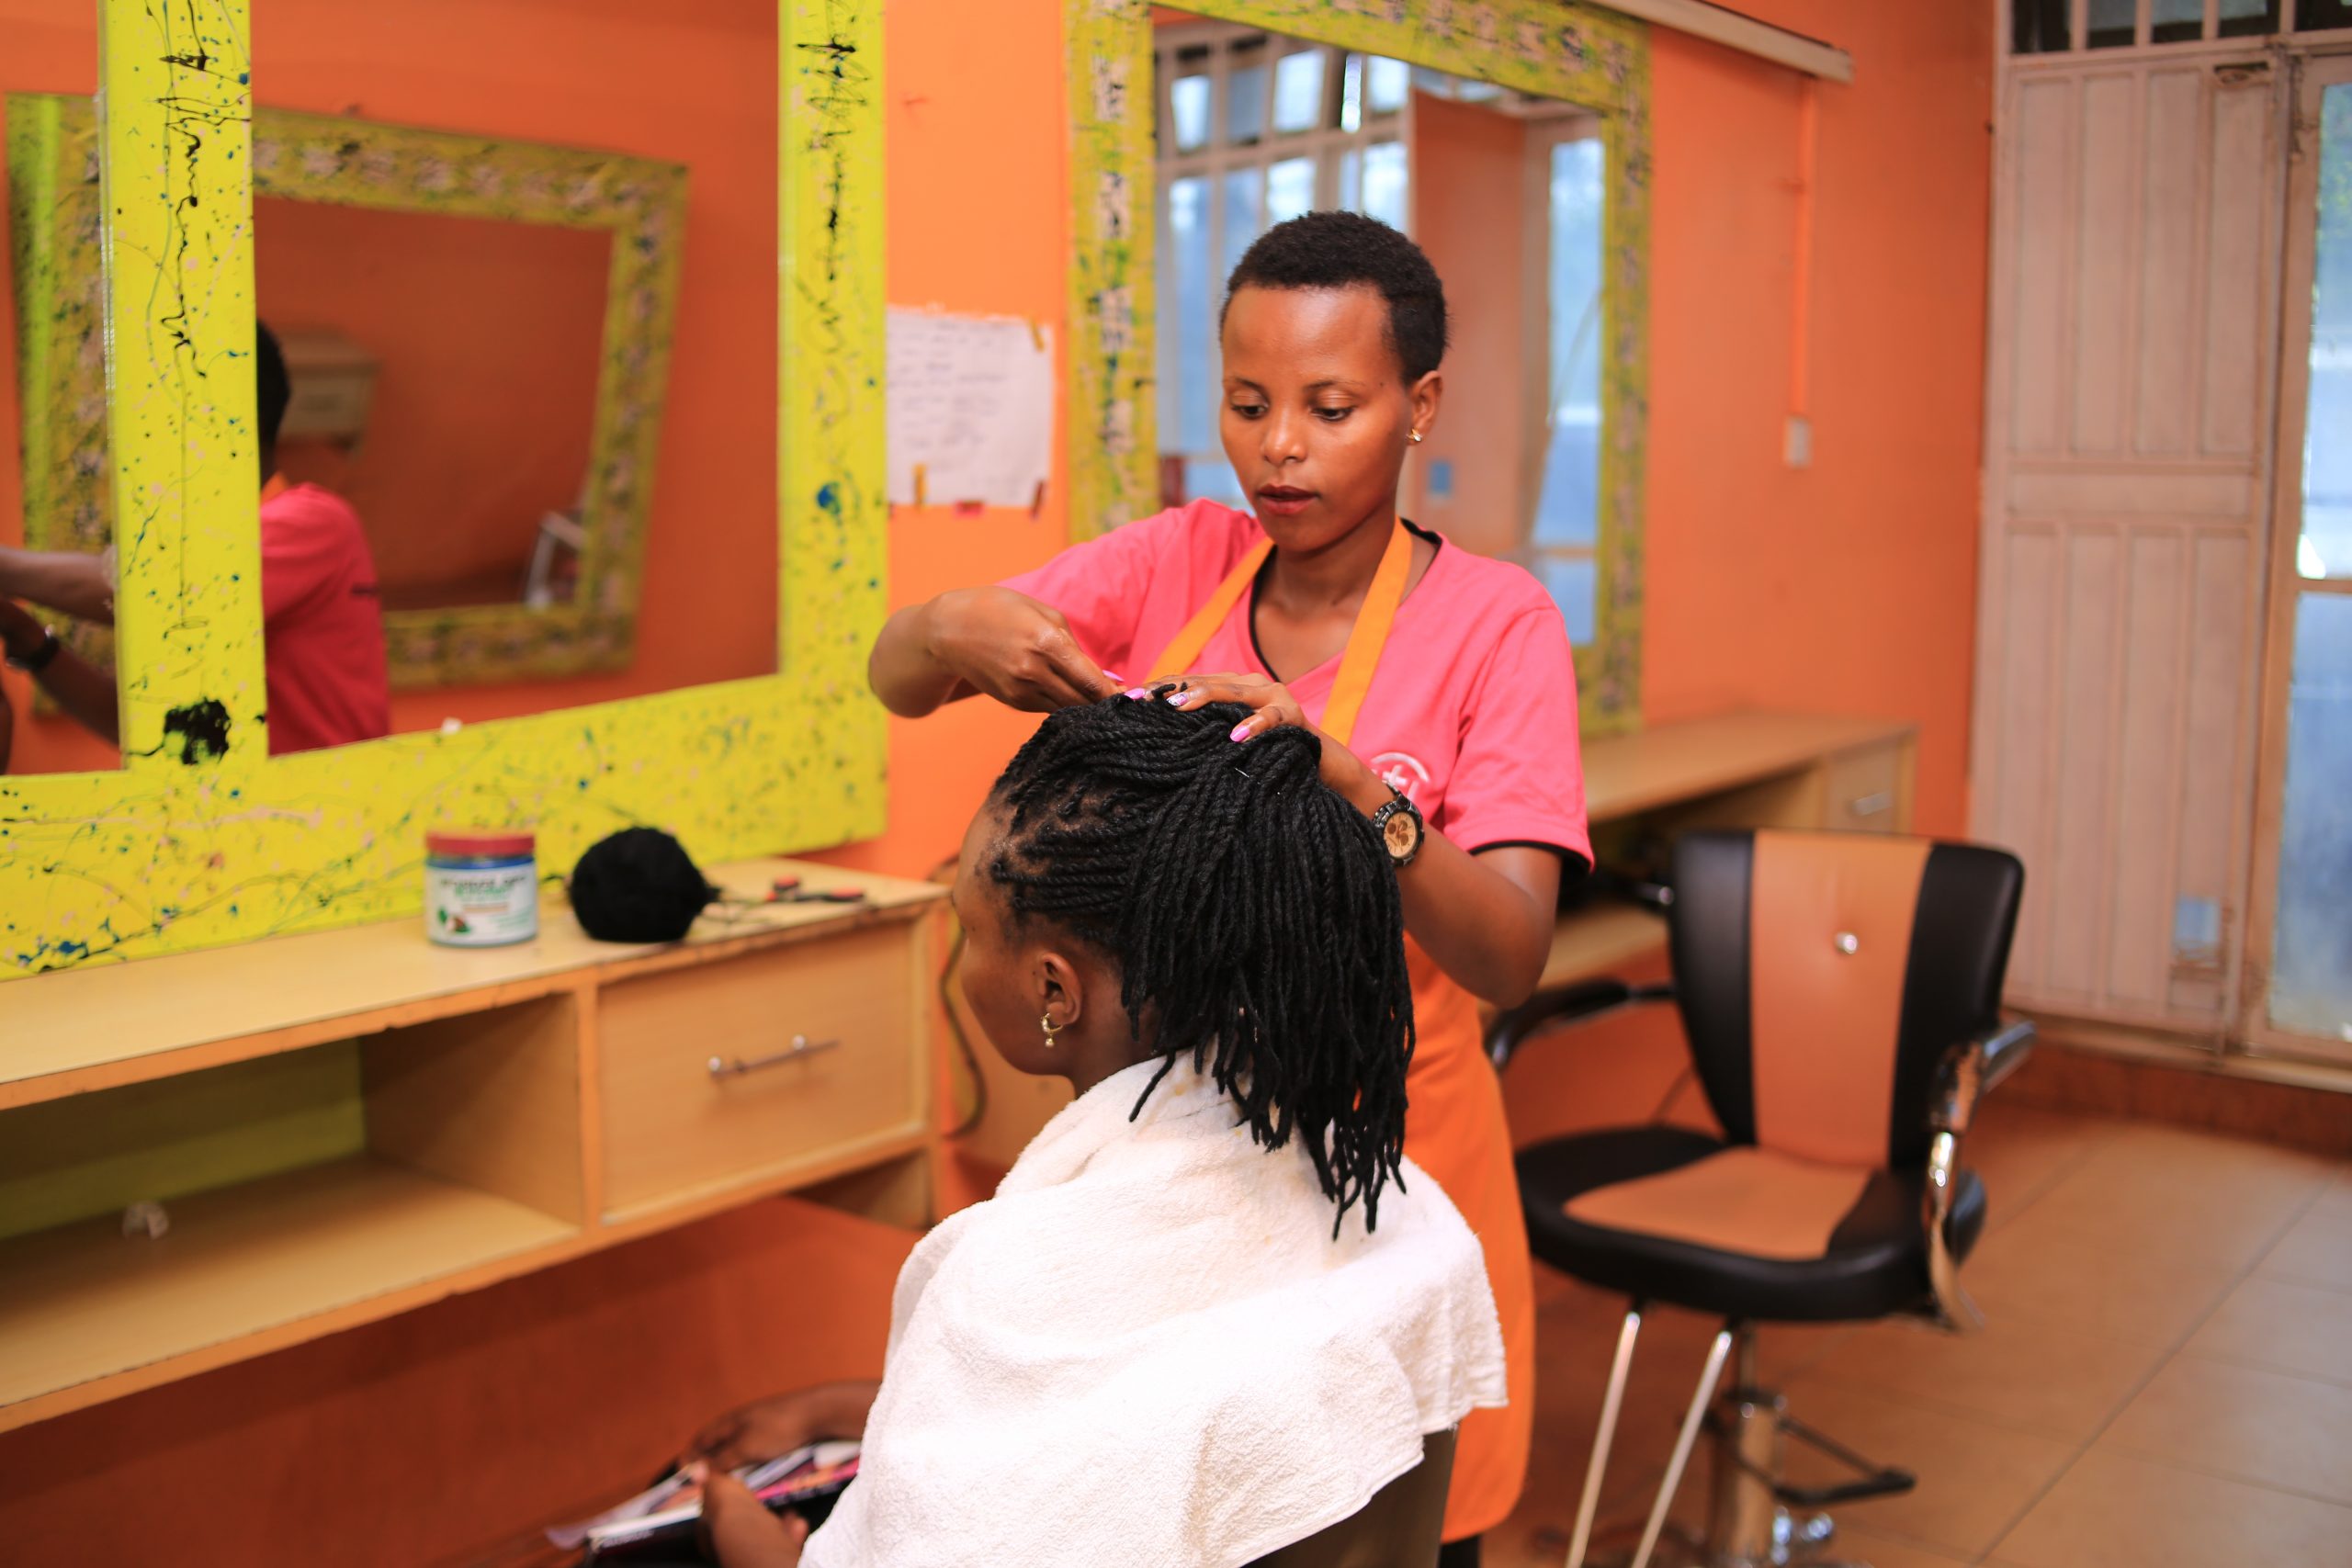 Carolyn works on a client in her salon business near Kampala, Uganda